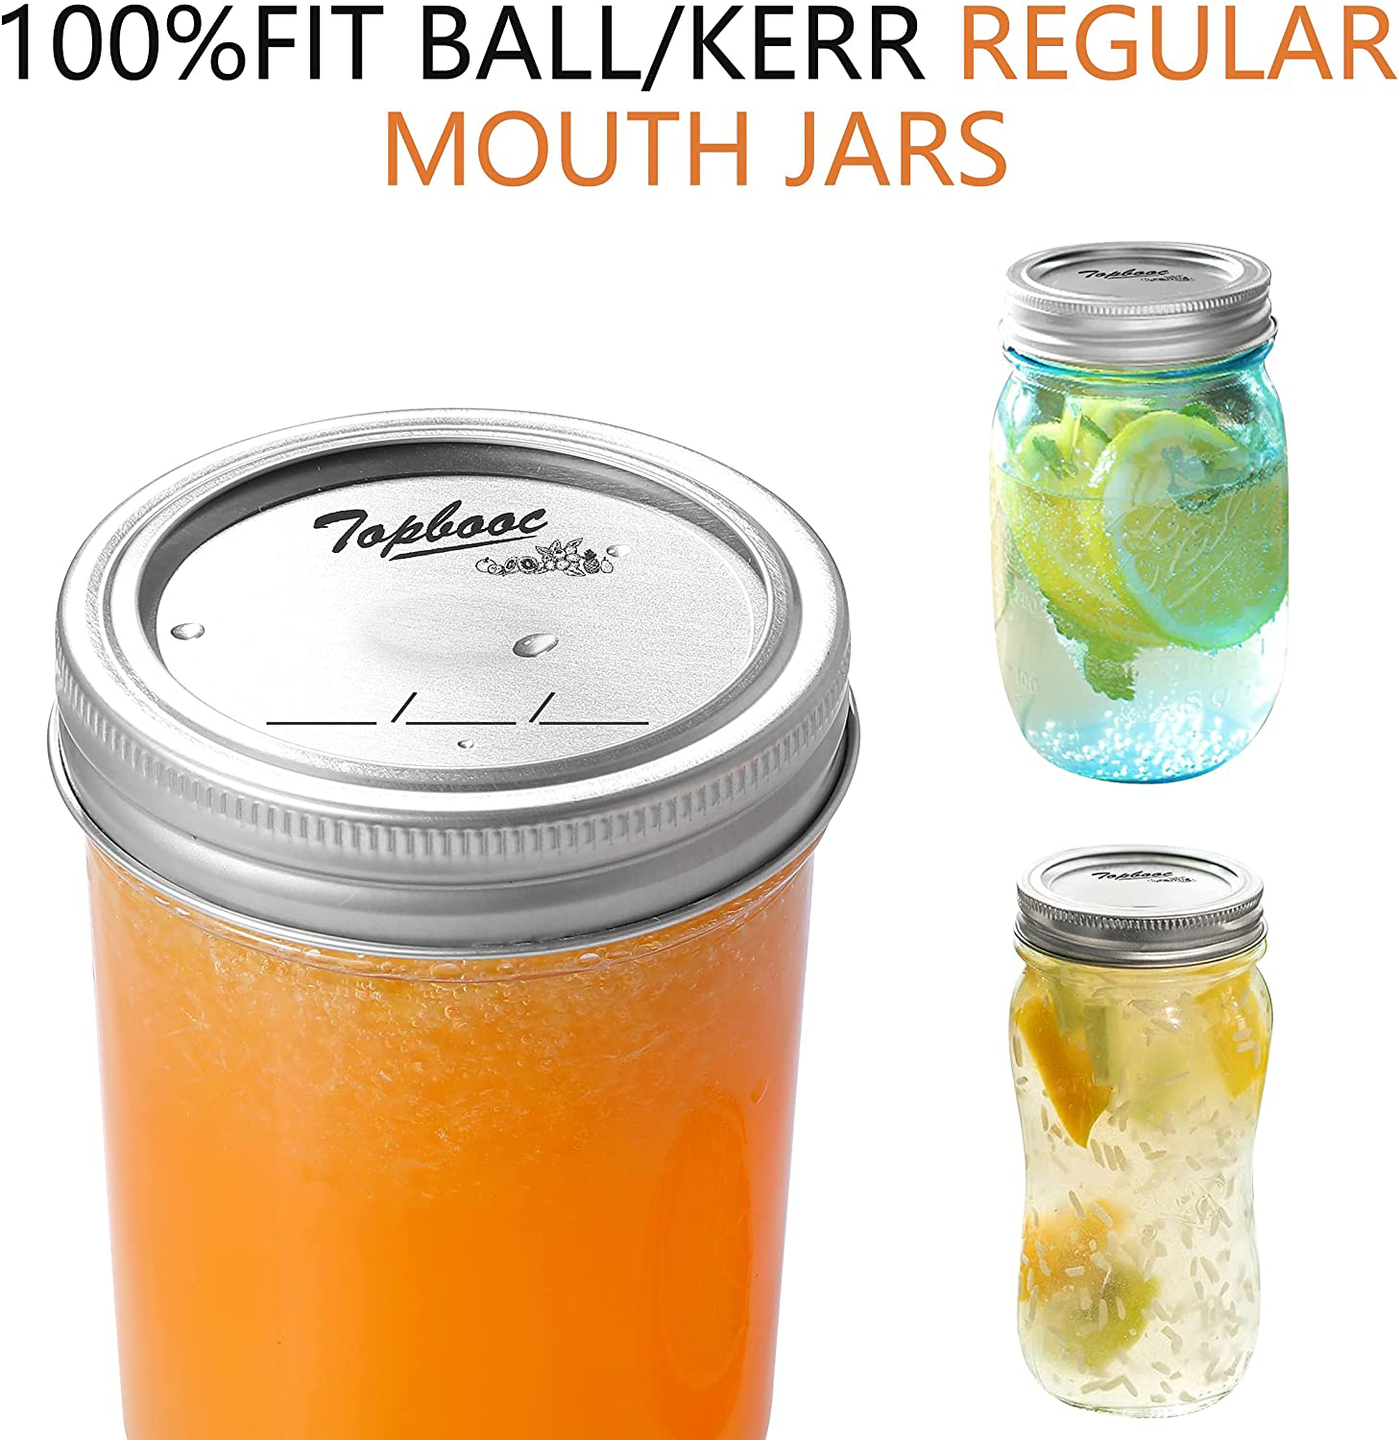 Canning Lids for Ball, Kerr Jars - Split-Type Metal Mason Jar Lids for Canning - Food Grade Material, 100% Fit & Airtight for Regular Mouth Jars (70mm Regular Mouth 148PCS)